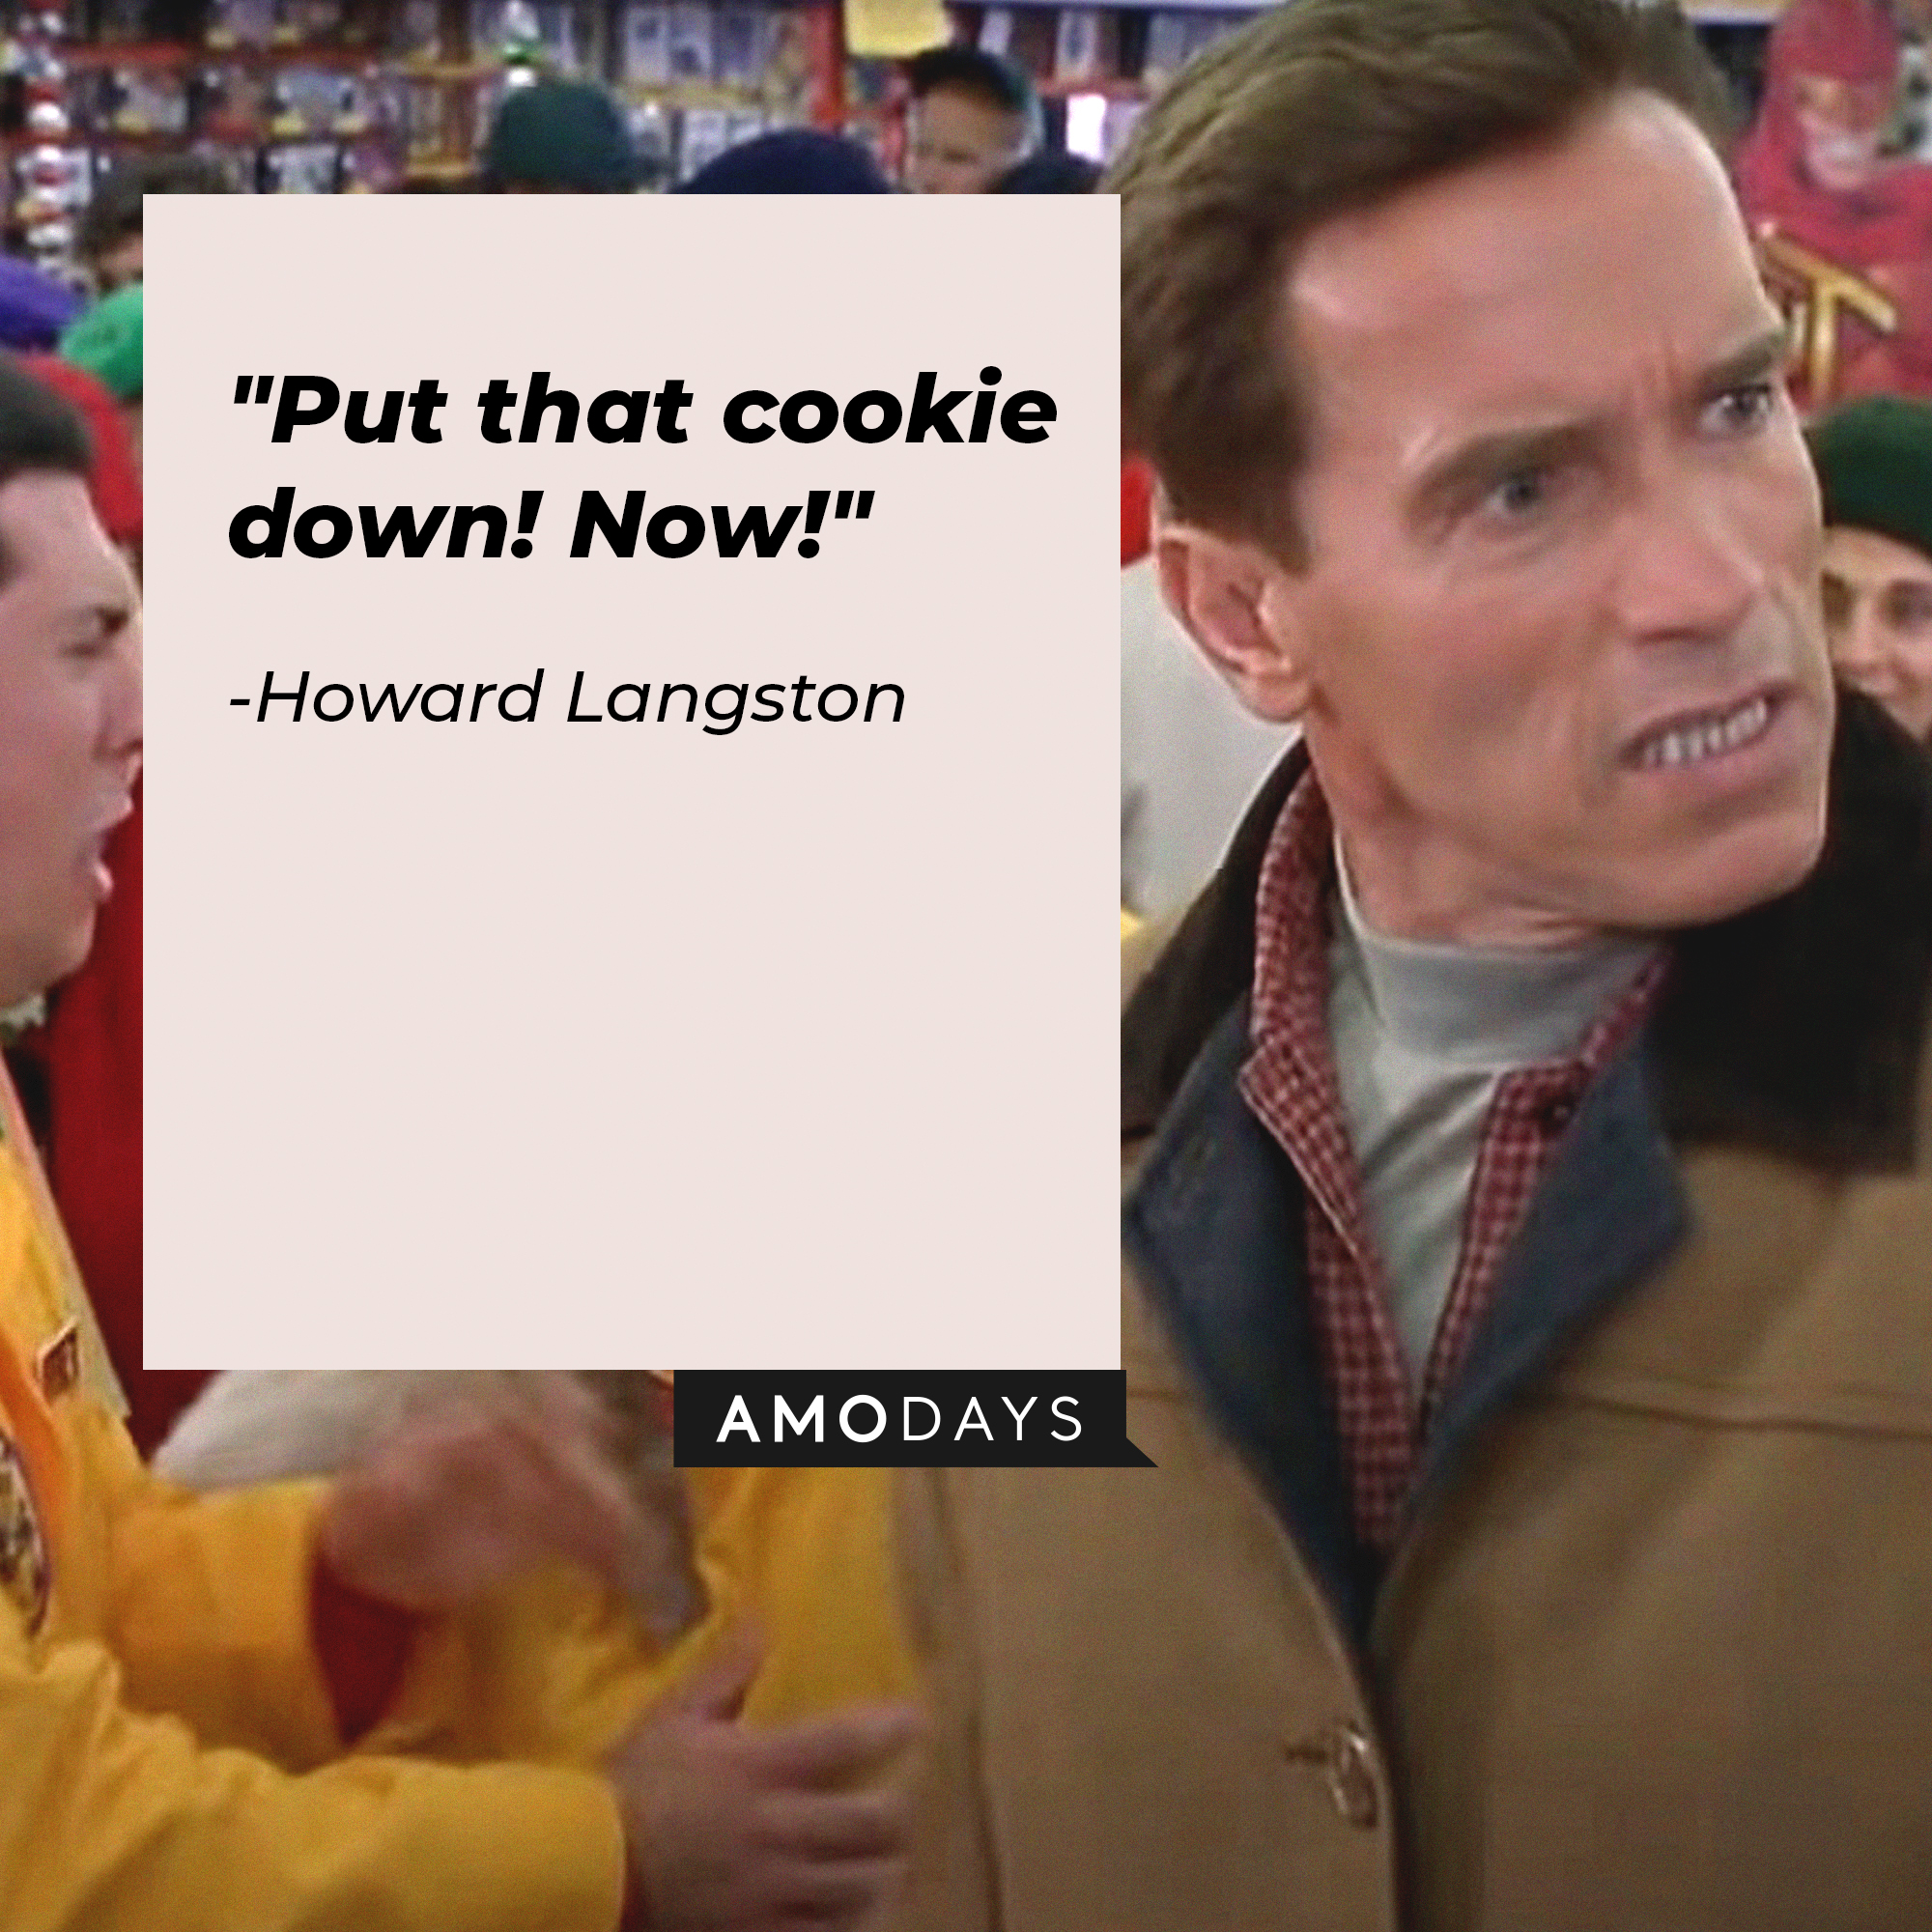 Howard Langston's quote: "Put that cookie down! Now!" | Source: Facebook.com/JingleAllTheWayMovies